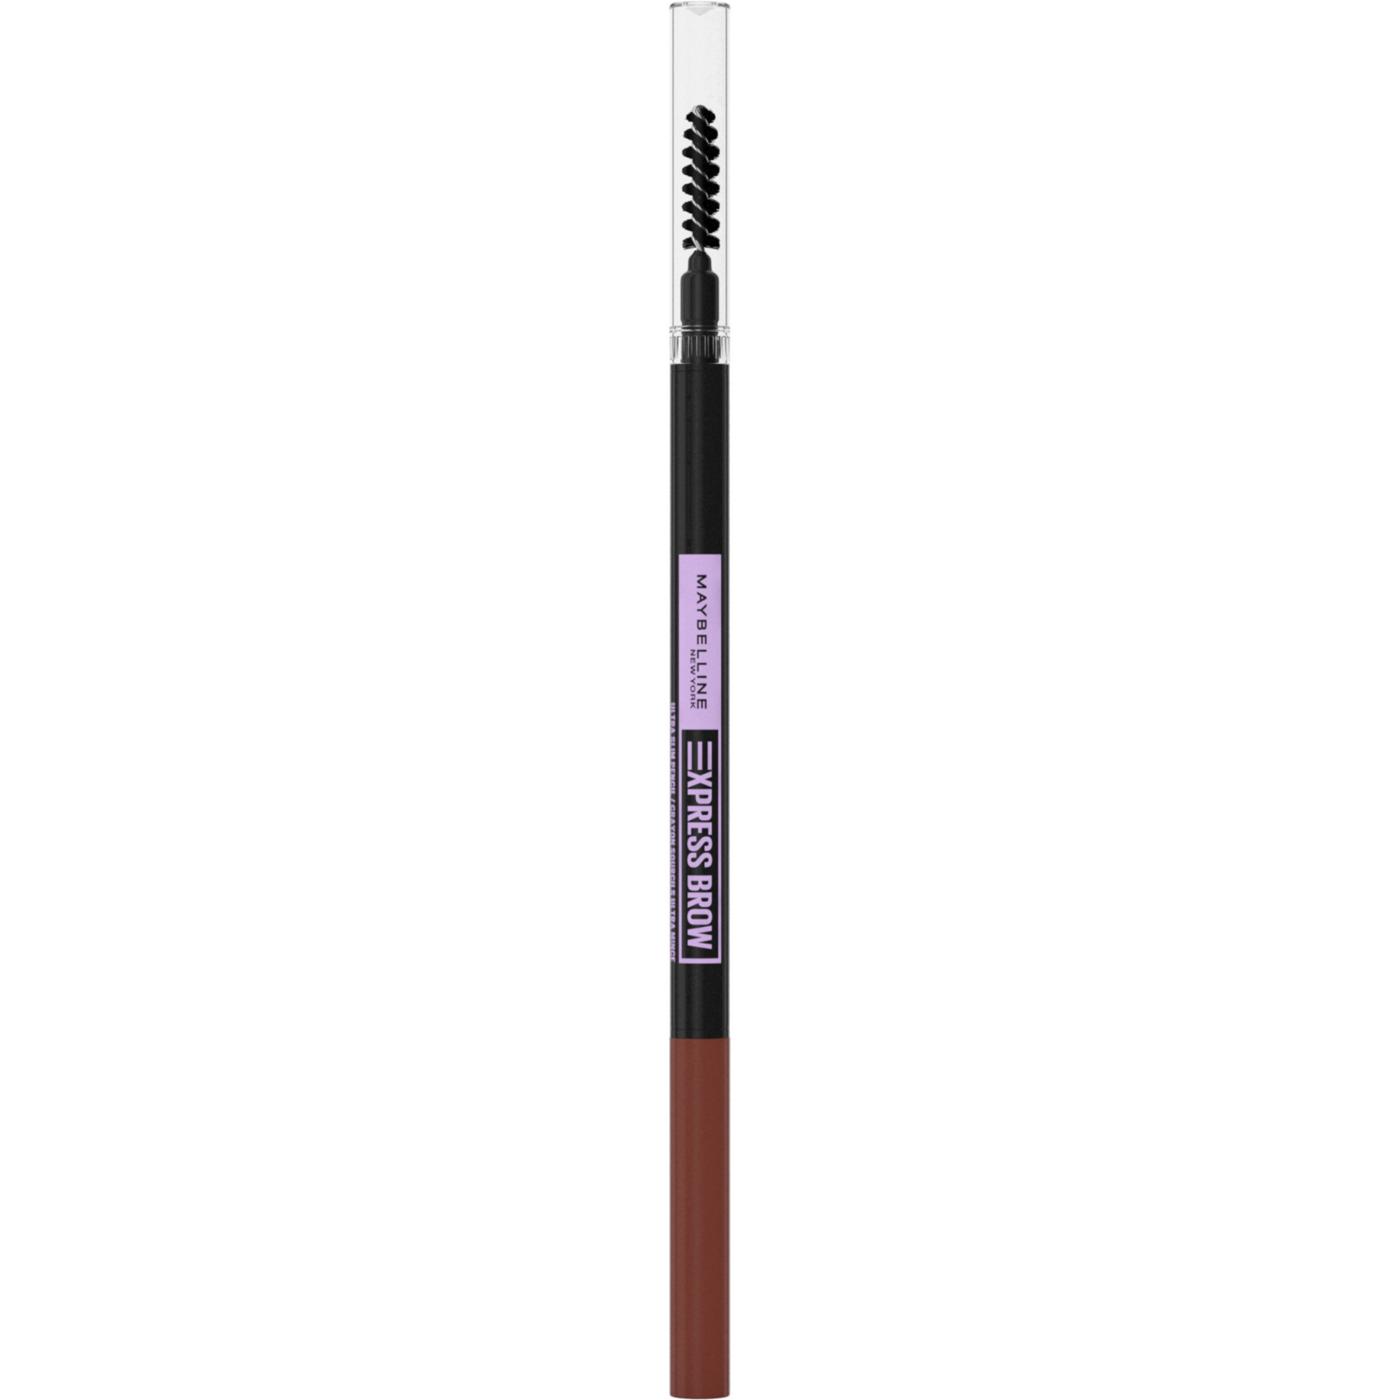 Maybelline Express Brow Ultra Slim Pencil - Auburn; image 2 of 6